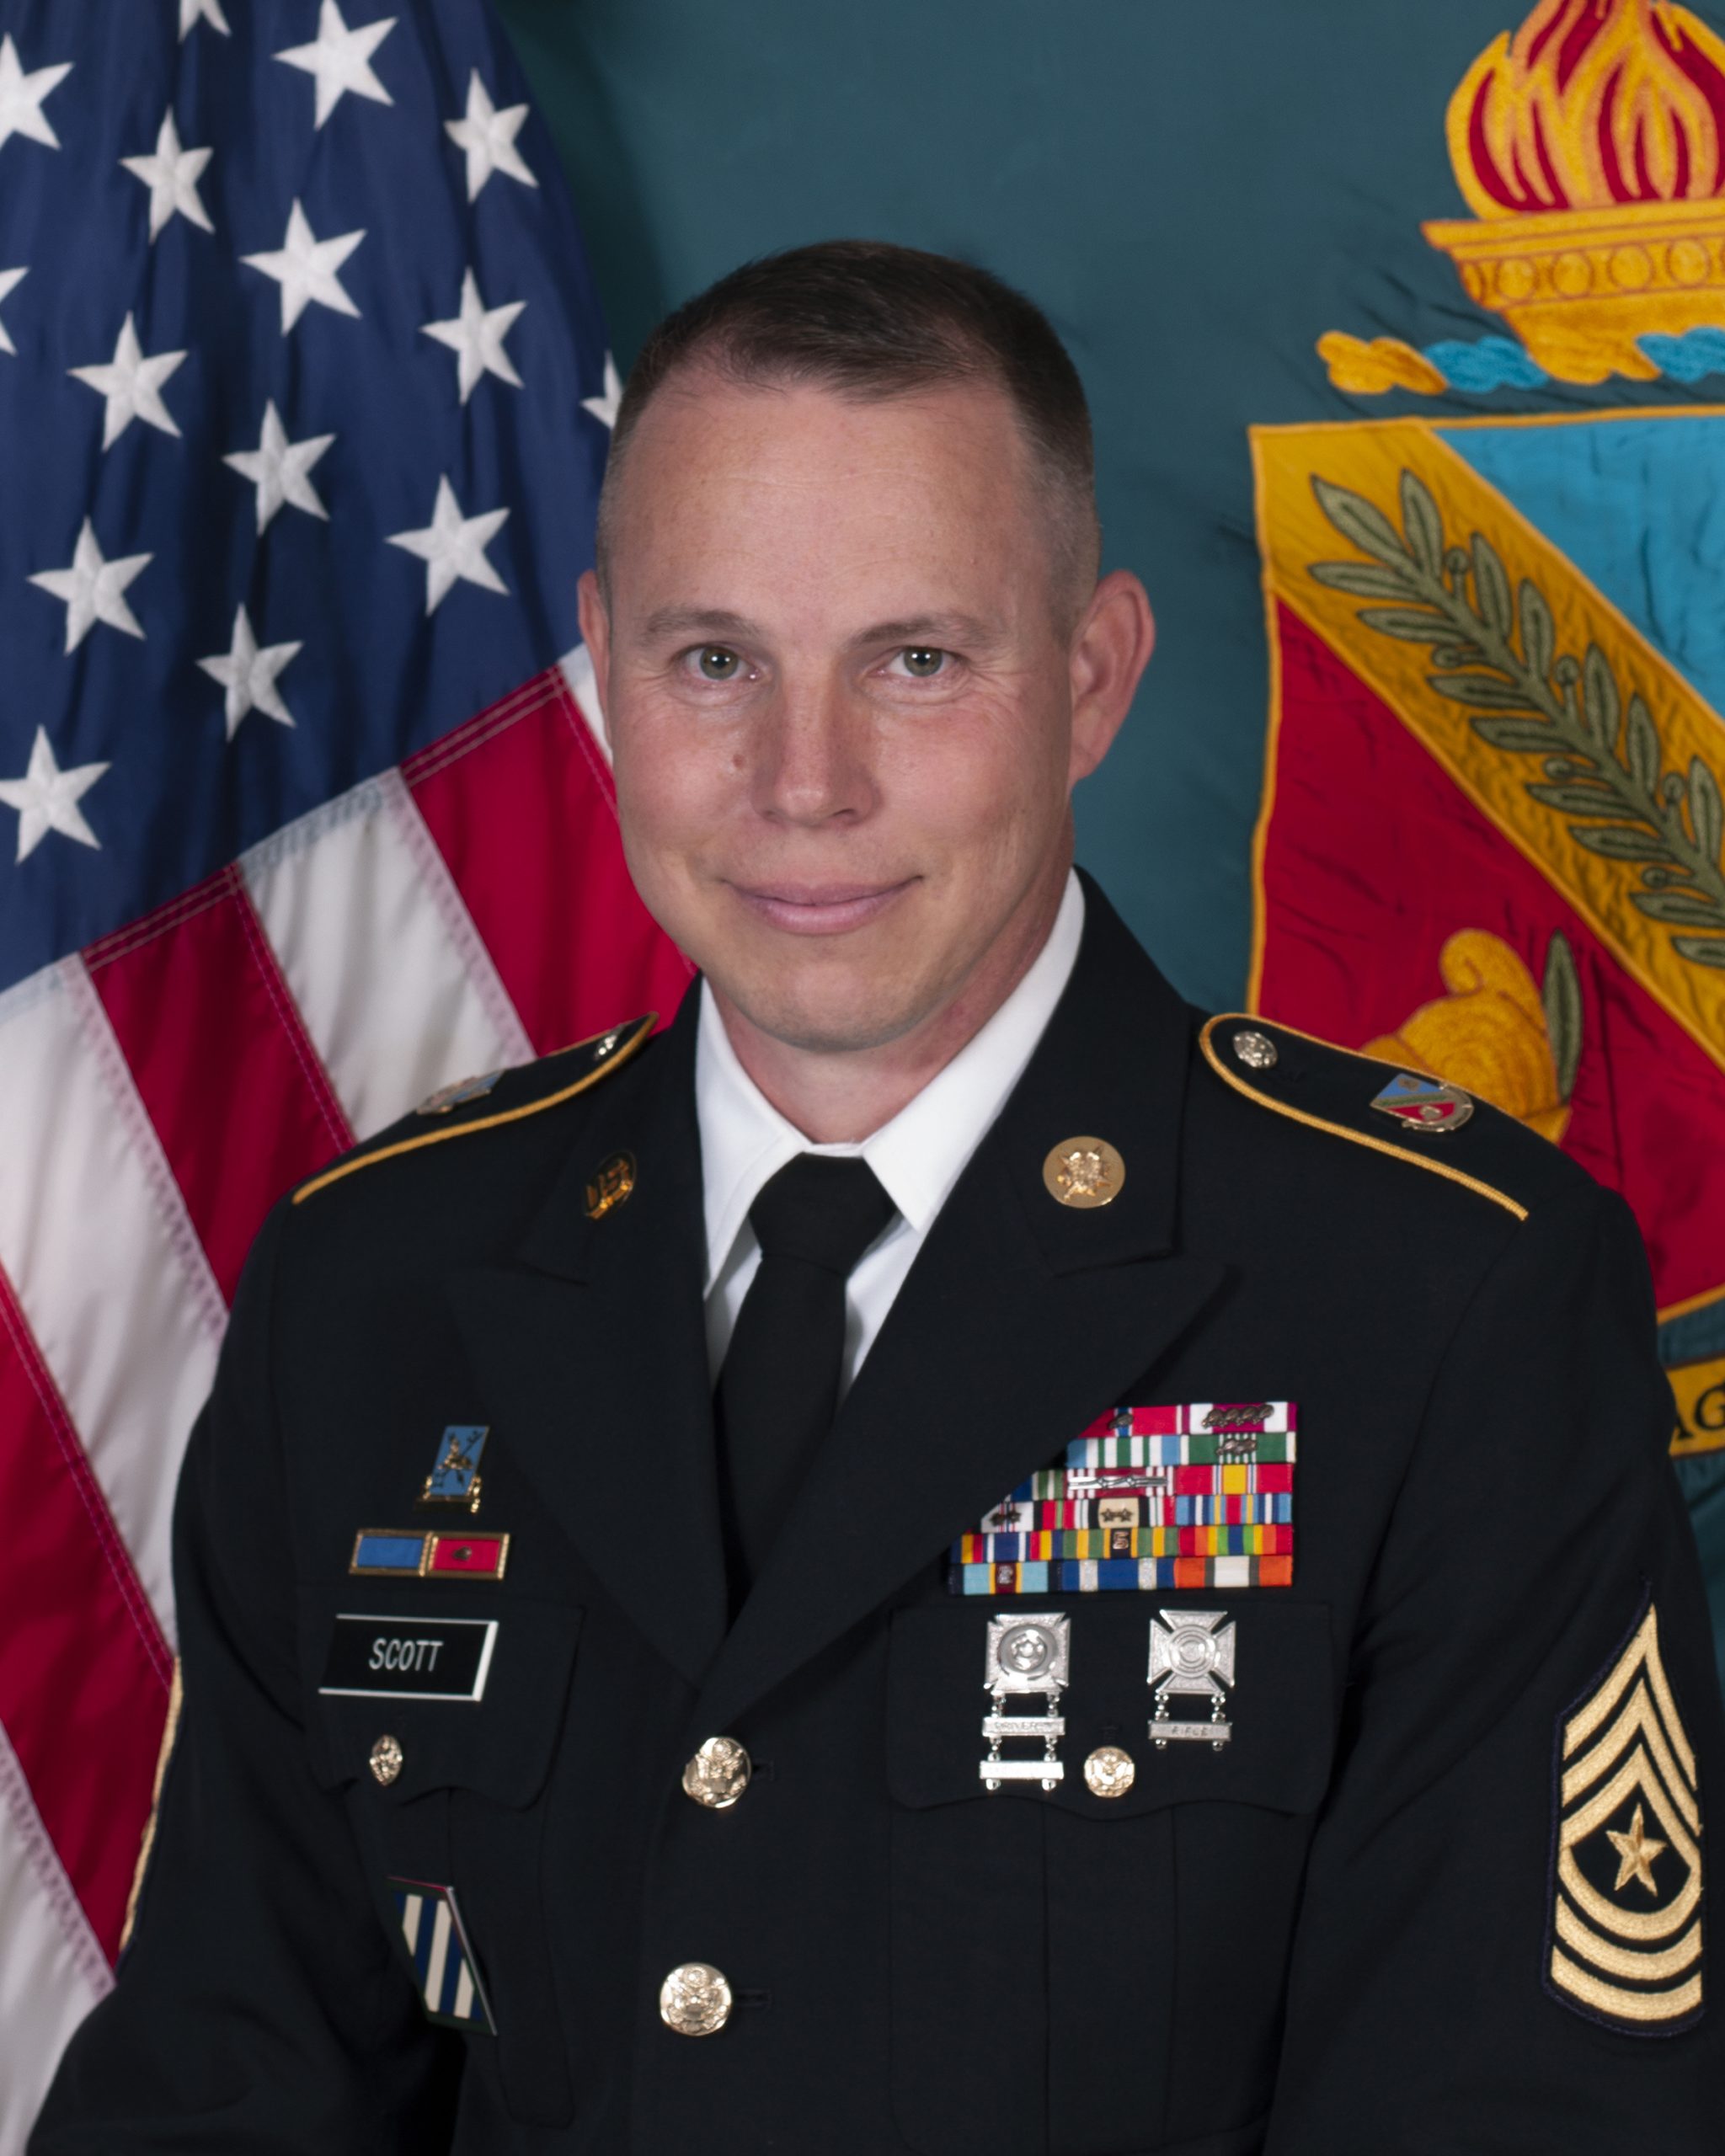 Sergeant Major David A. Scott, Jr